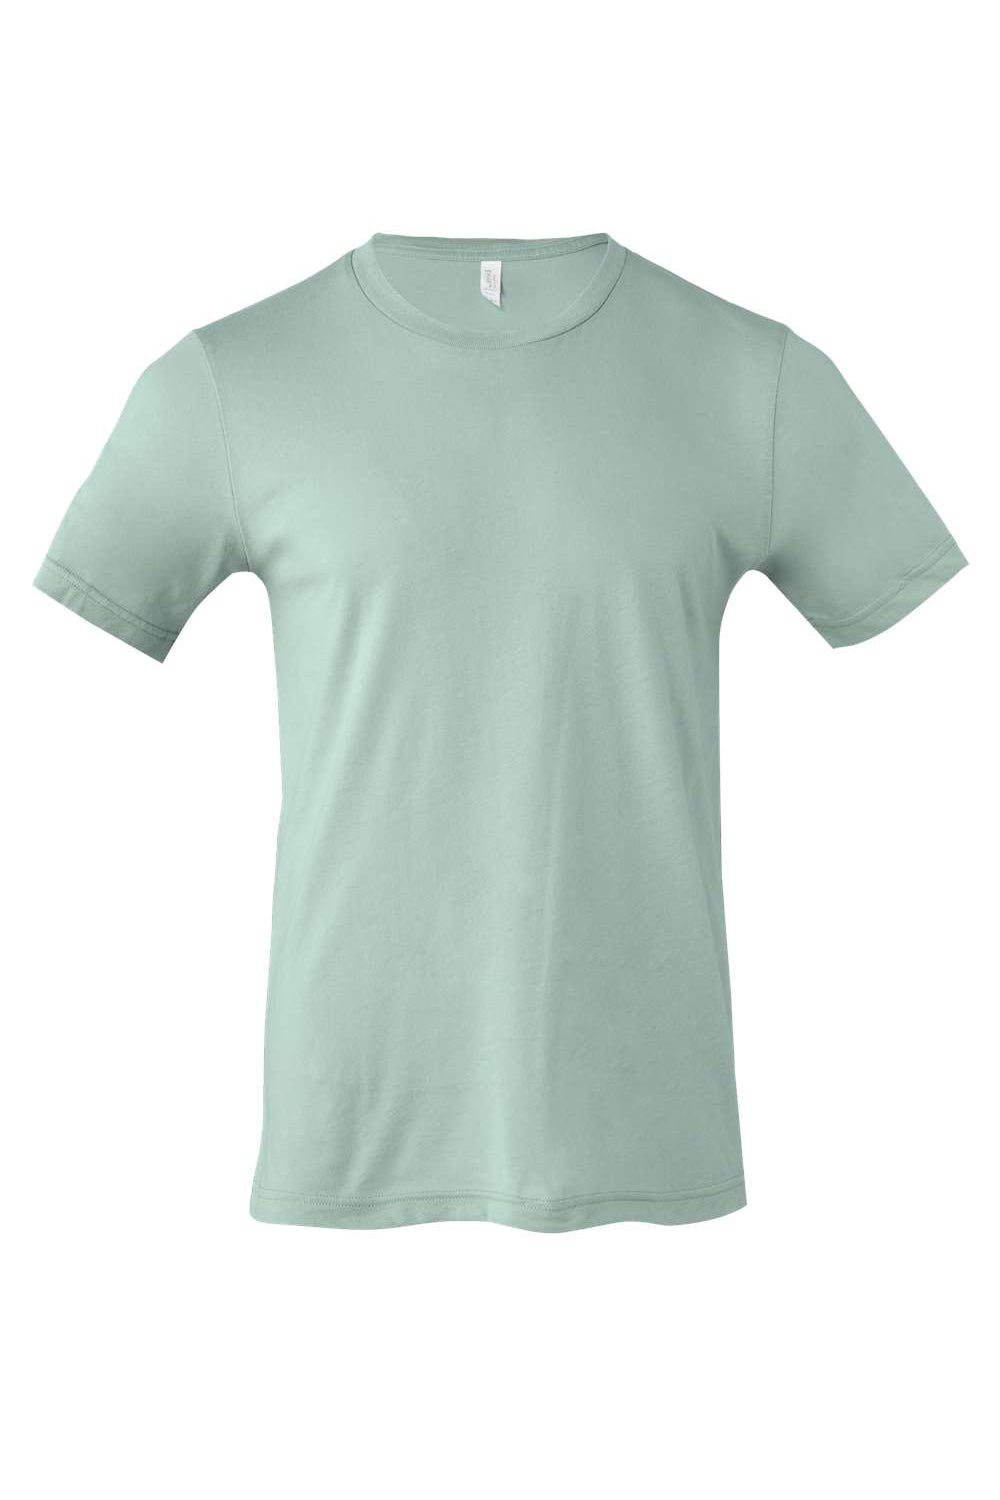 Bella + Canvas BC3001/3001C Mens Jersey Short Sleeve Crewneck T-Shirt Dusty Blue Flat Front